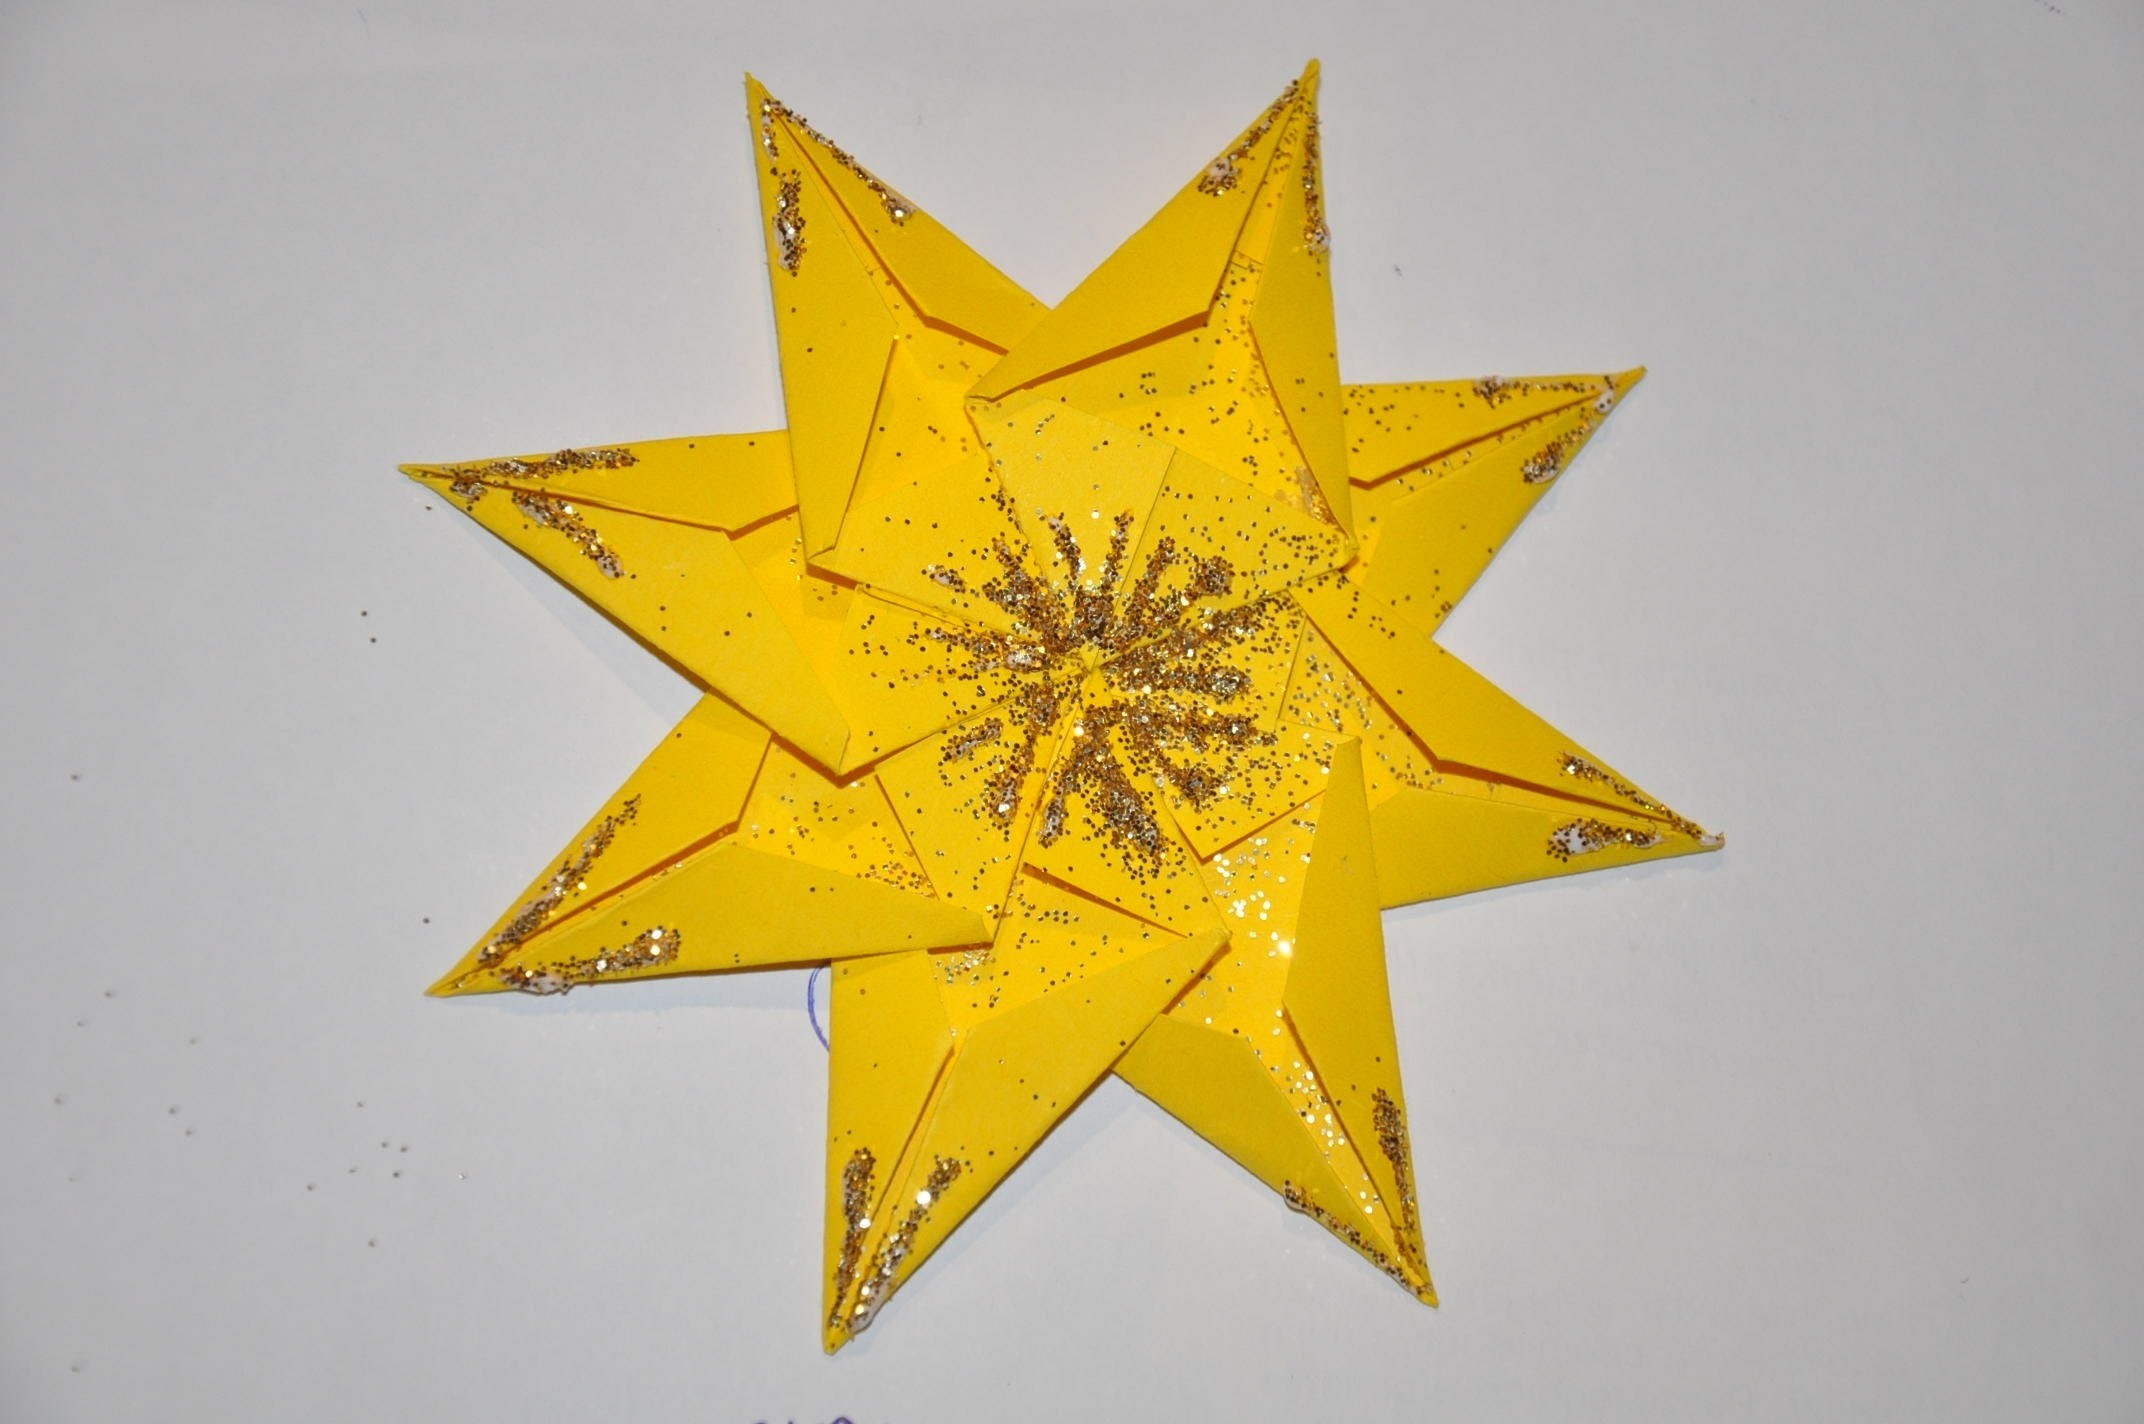 Gwiazda z papieru krok po kroku # How to make a paper star DIY